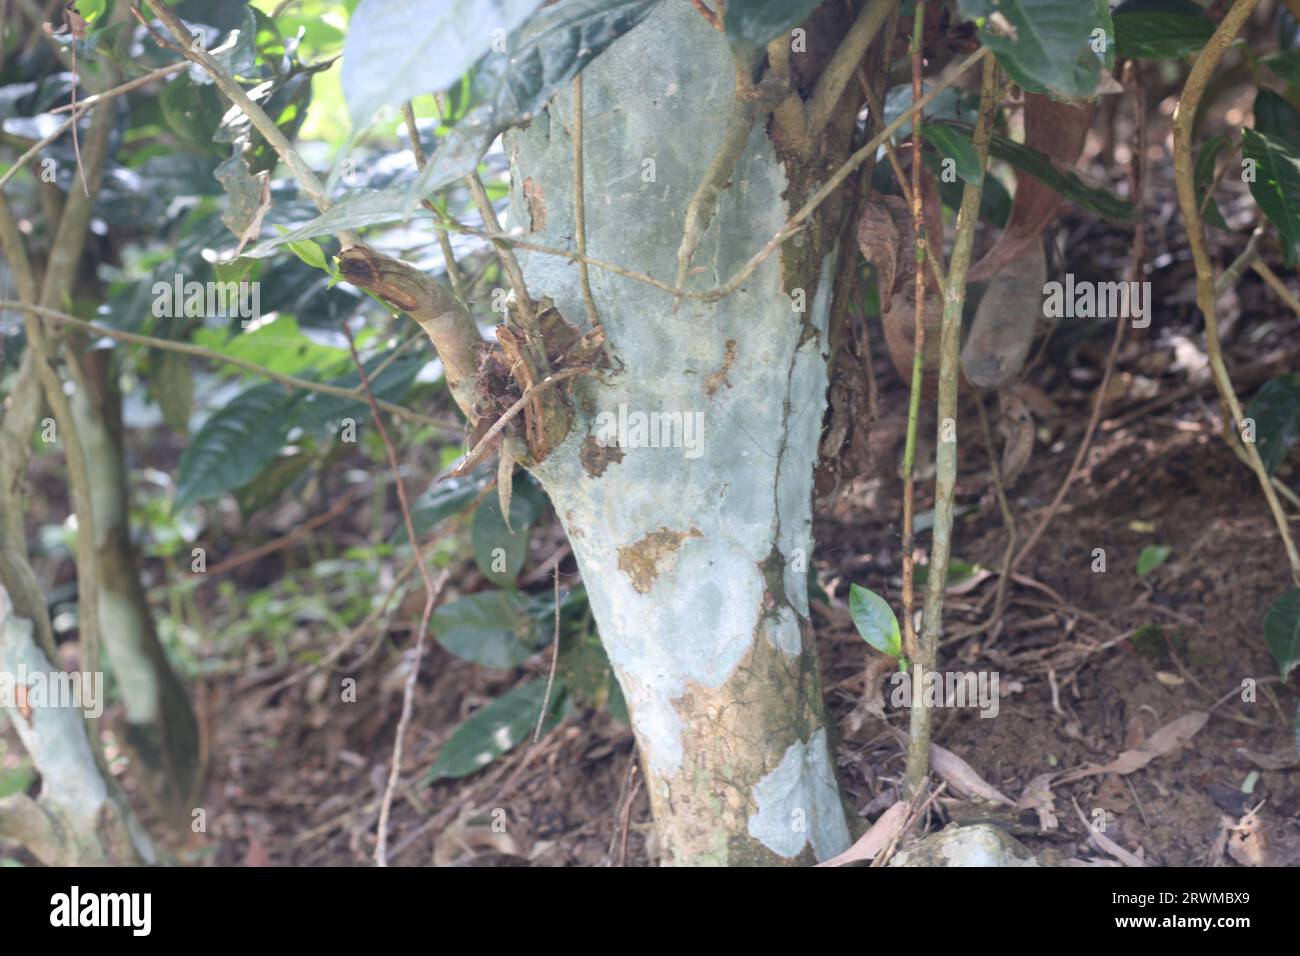 Fungus diseases of tea plants Stock Photo